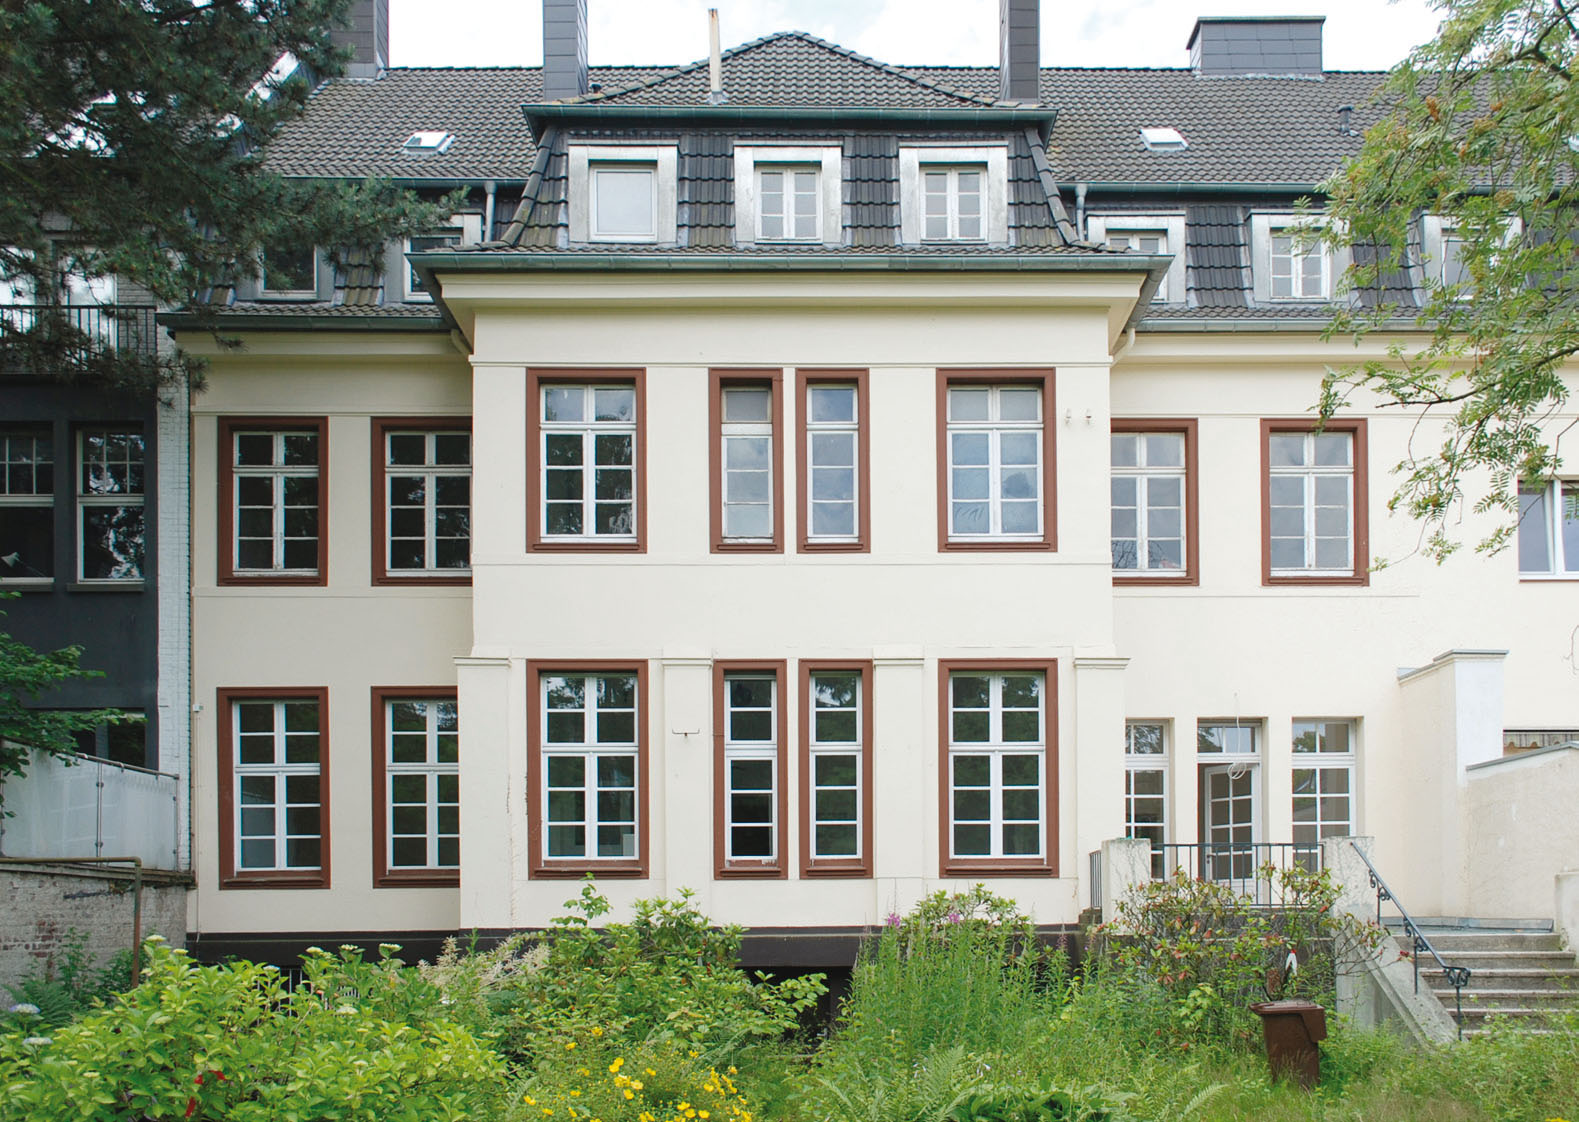 VERKAUFT: Neoklassizistische Stadthäuser in Krefeld 